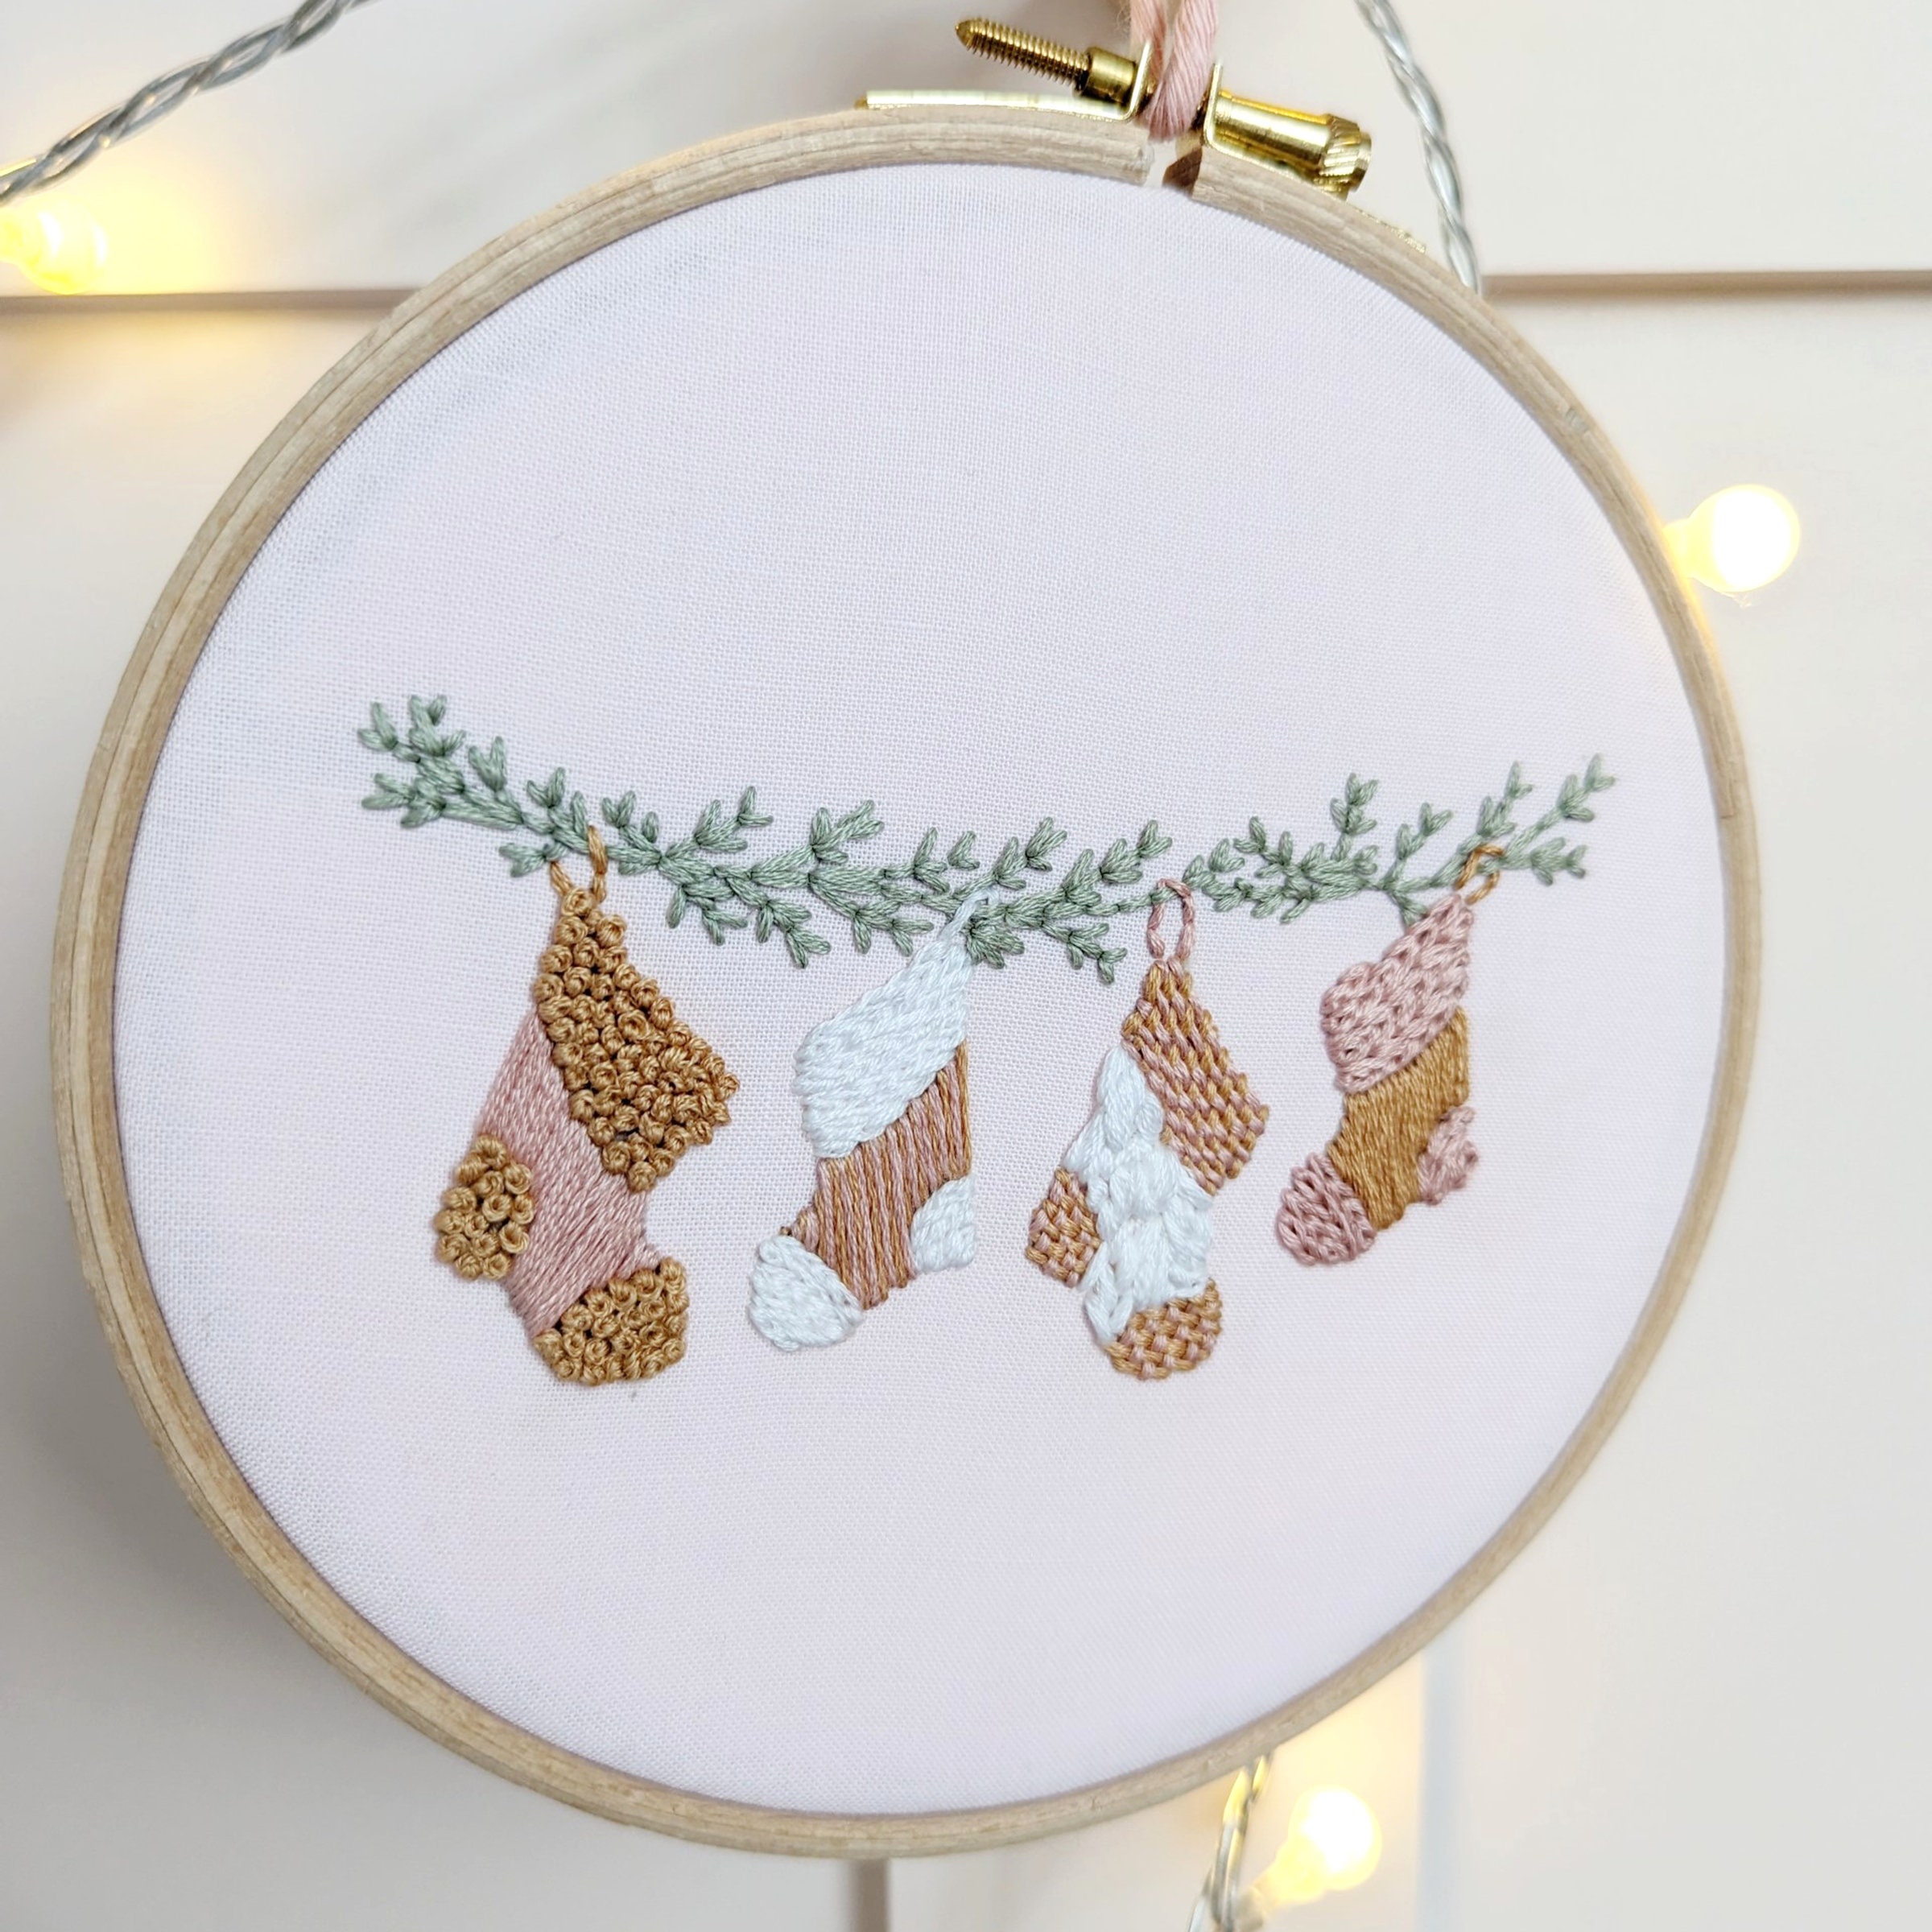 Stitchery Christmas: Vintage Christmas Wreath Embroidery Kit — The Stitchery